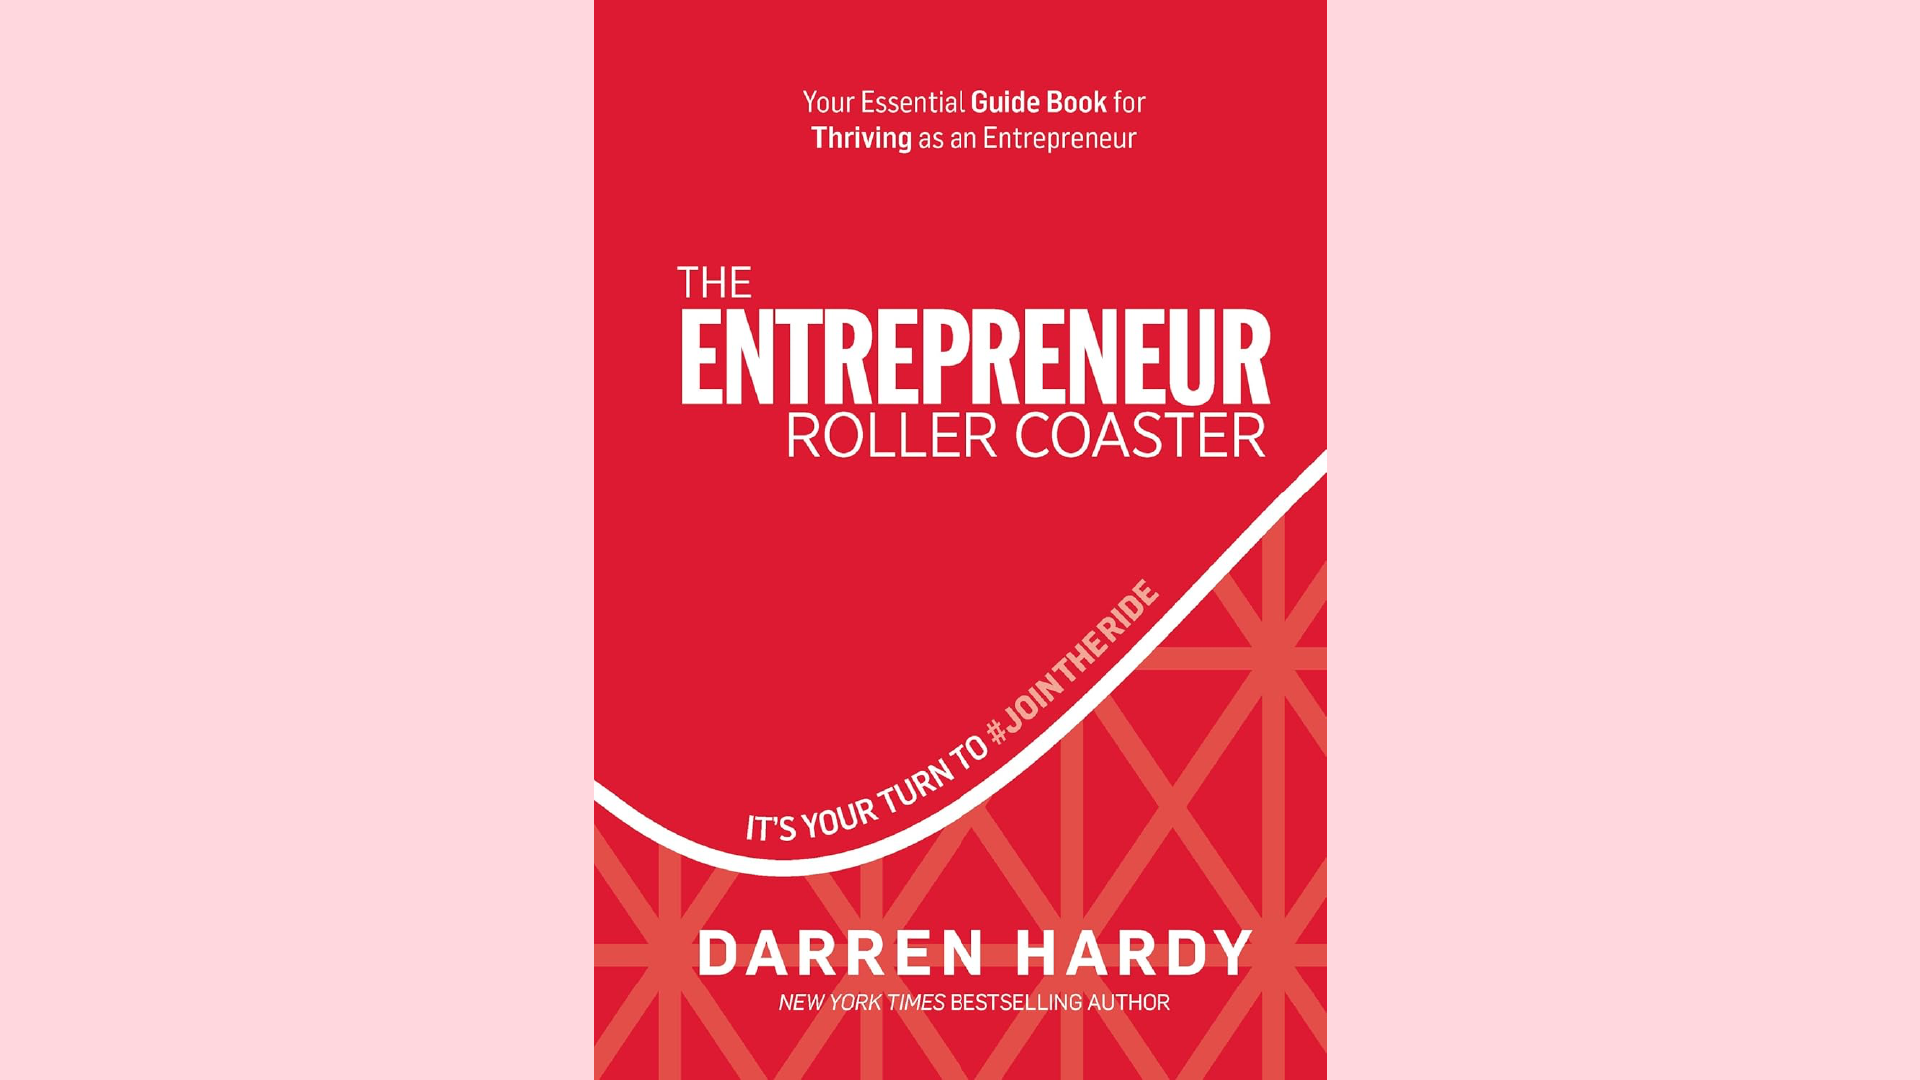 Summary: "The Entrepreneur Roller Coaster" by Darren Hardy